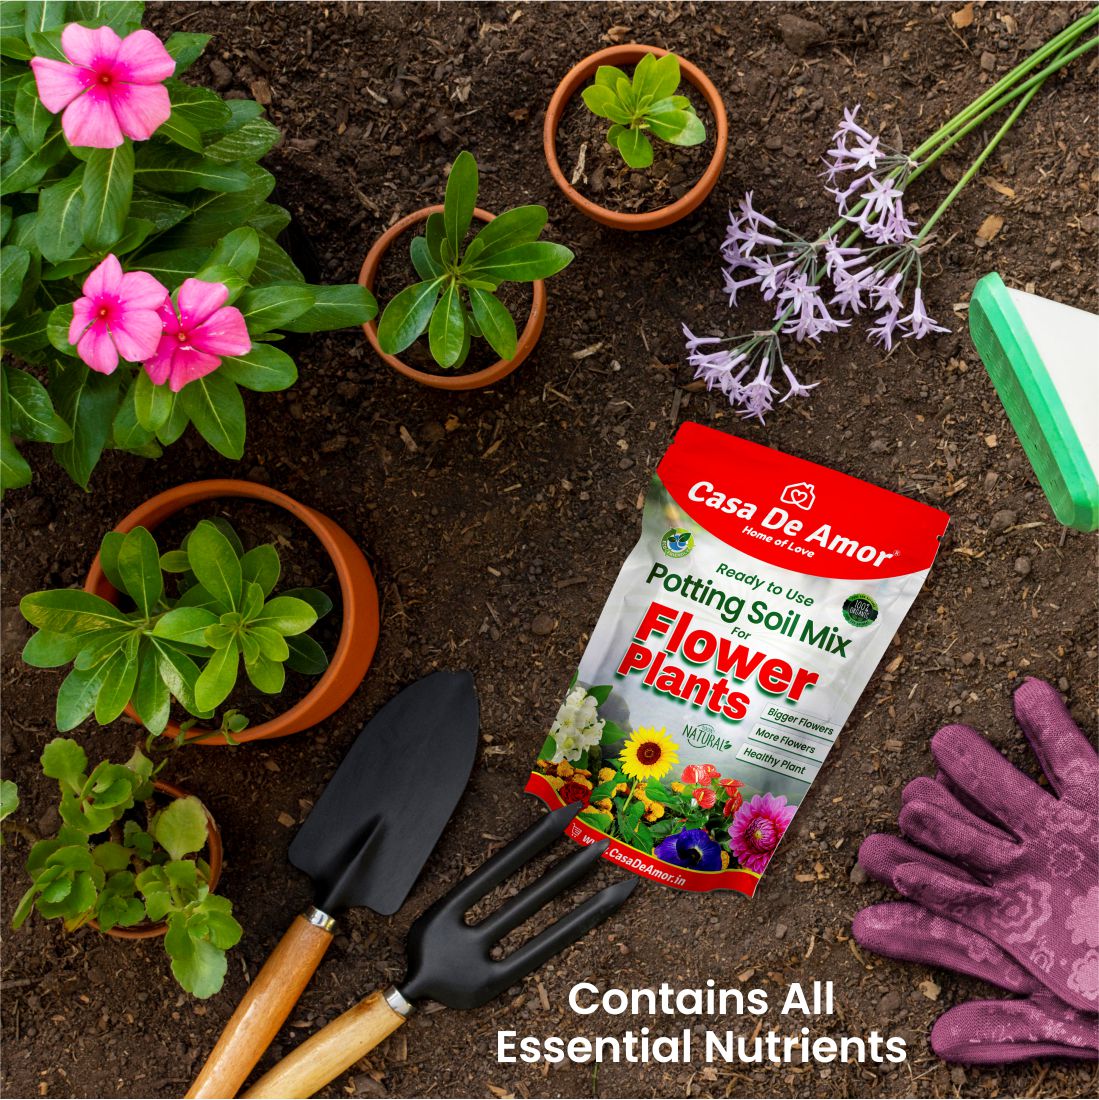 Casa De Amor Organic Flower Potting Soil Mix for Home Garden Flower Plants, Ready to Use